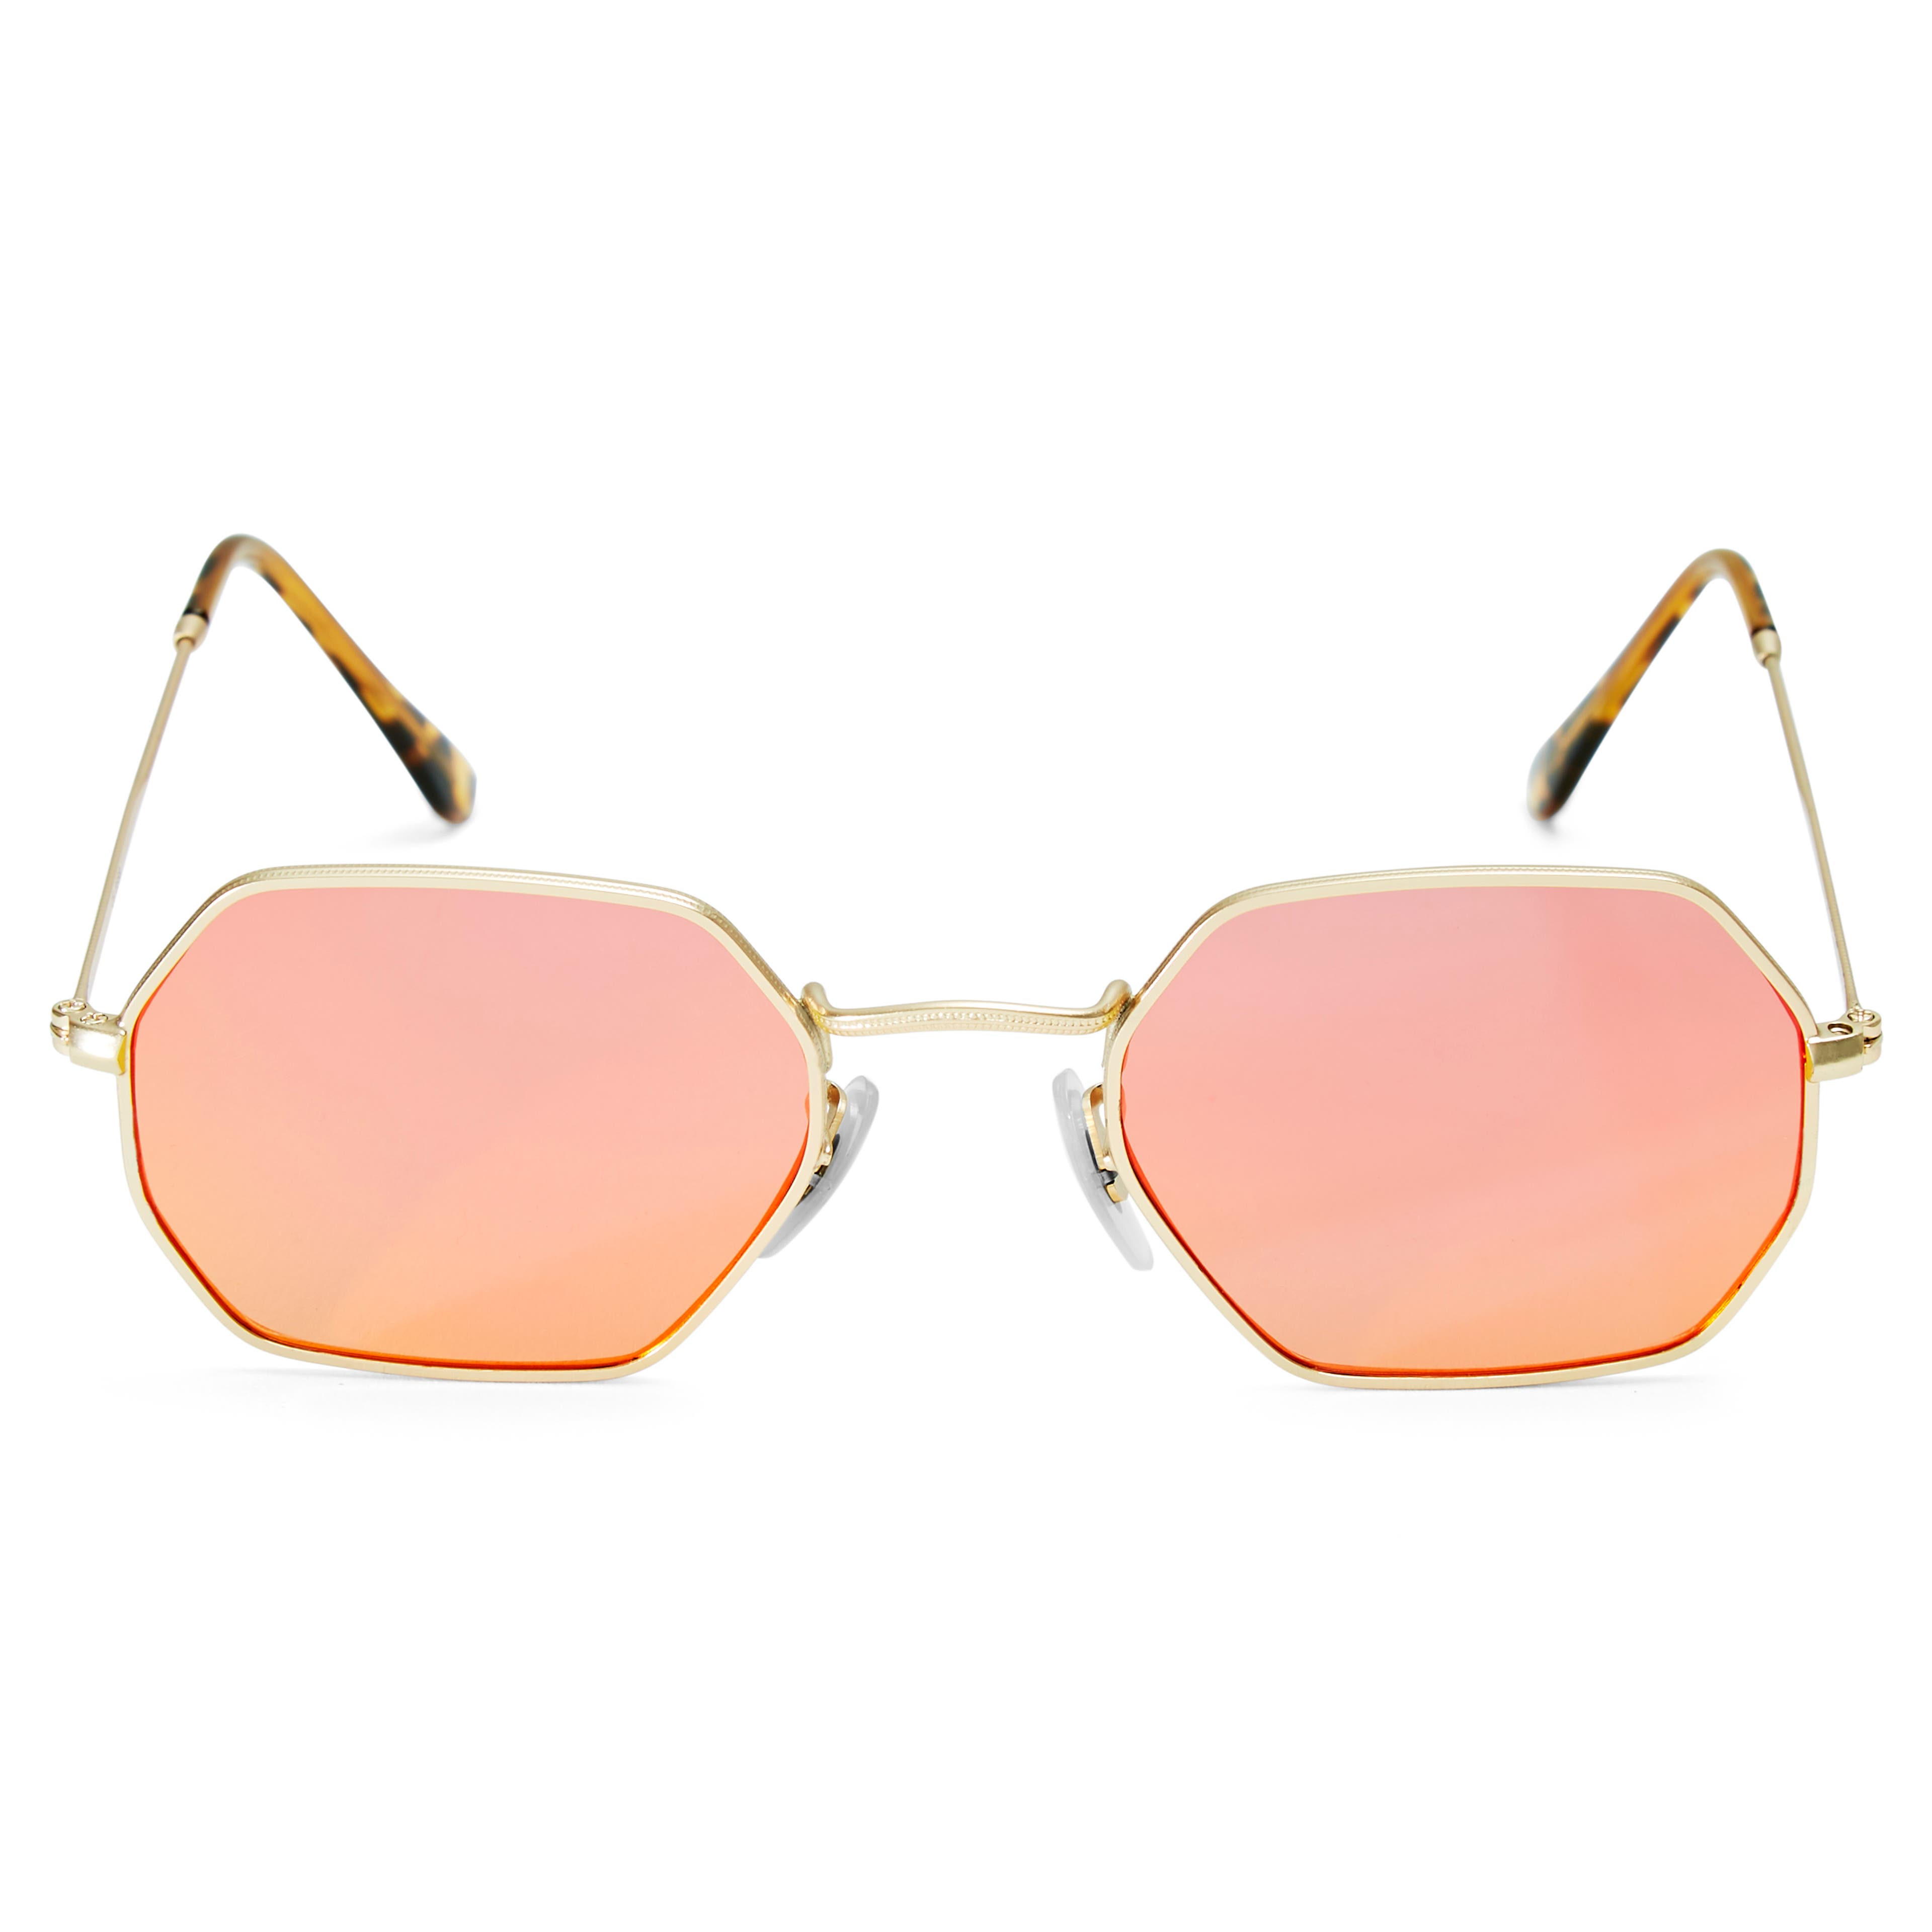 Groovy Goldfarbene & Orangefarbene Sonnenbrille